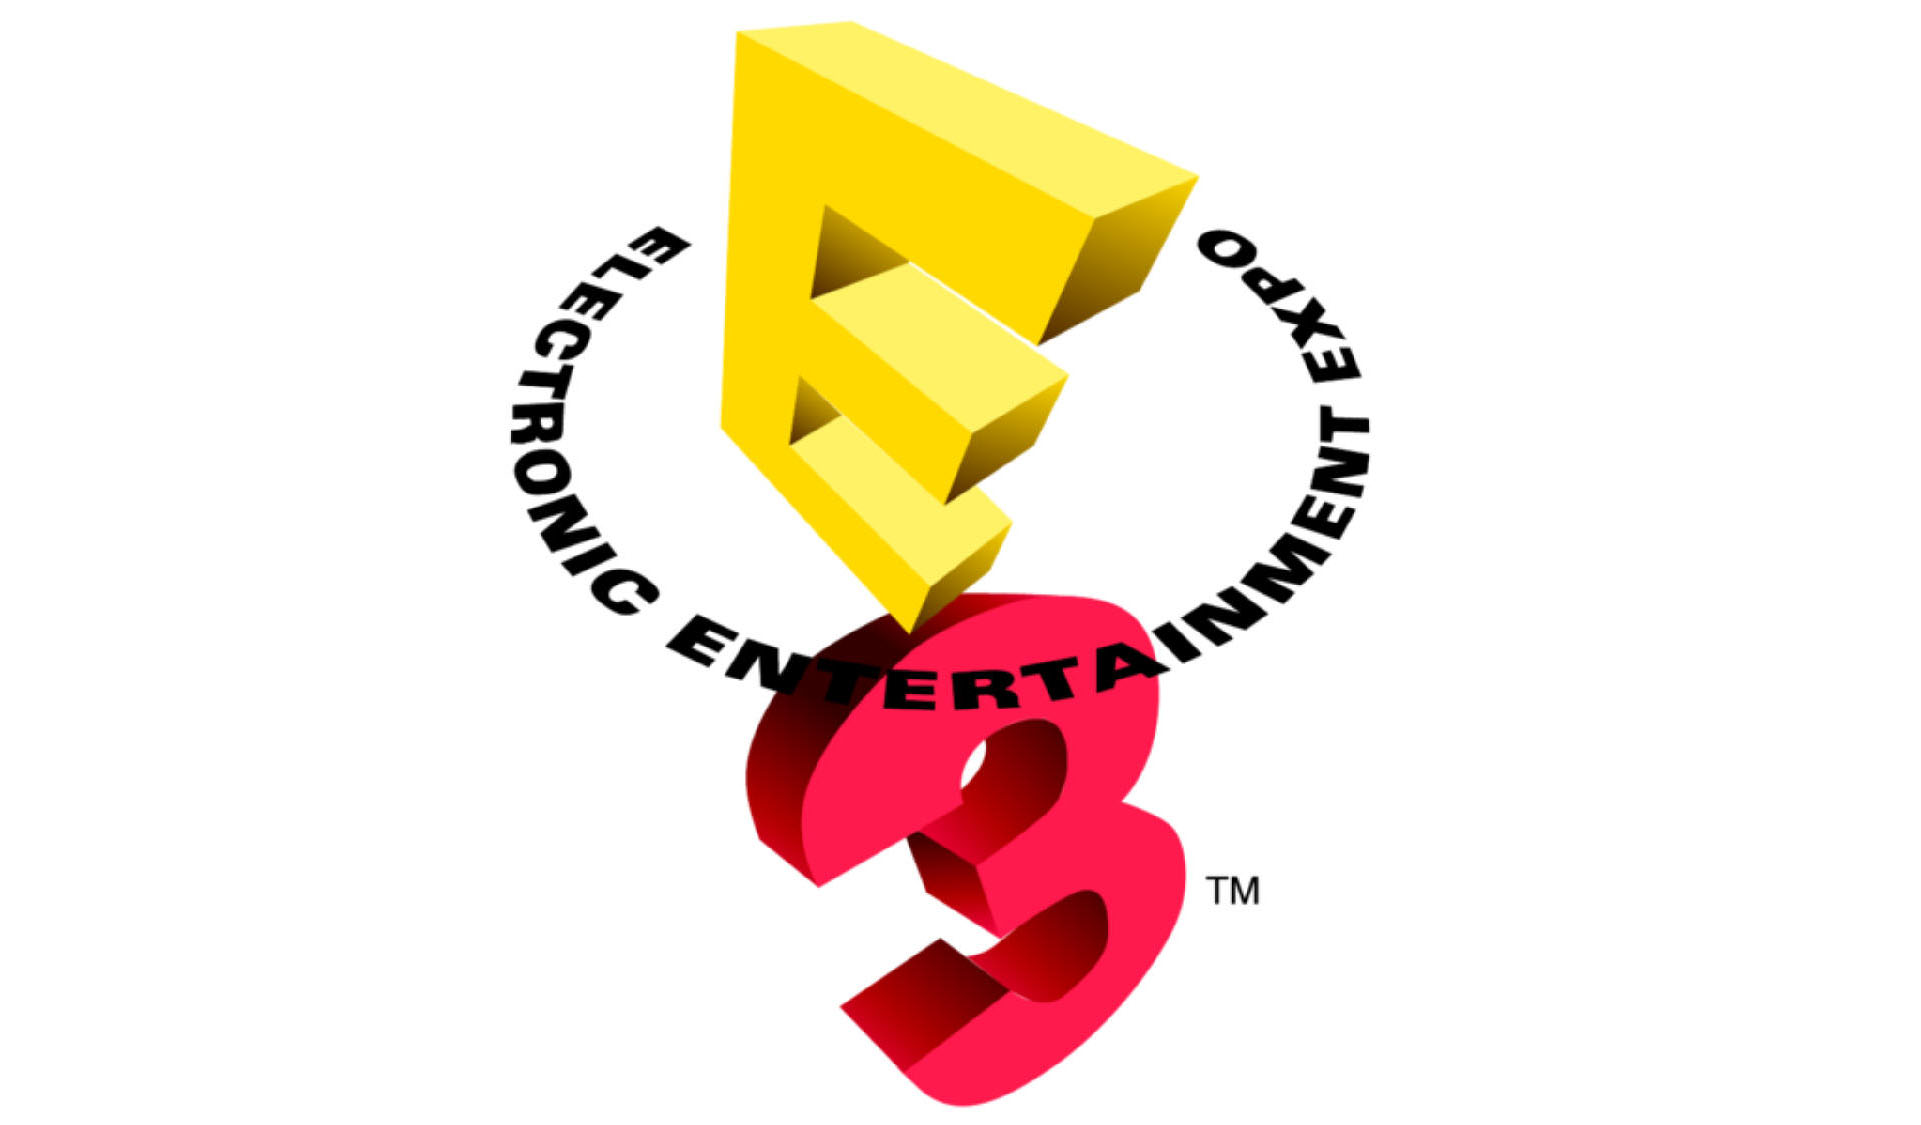 E3-2015